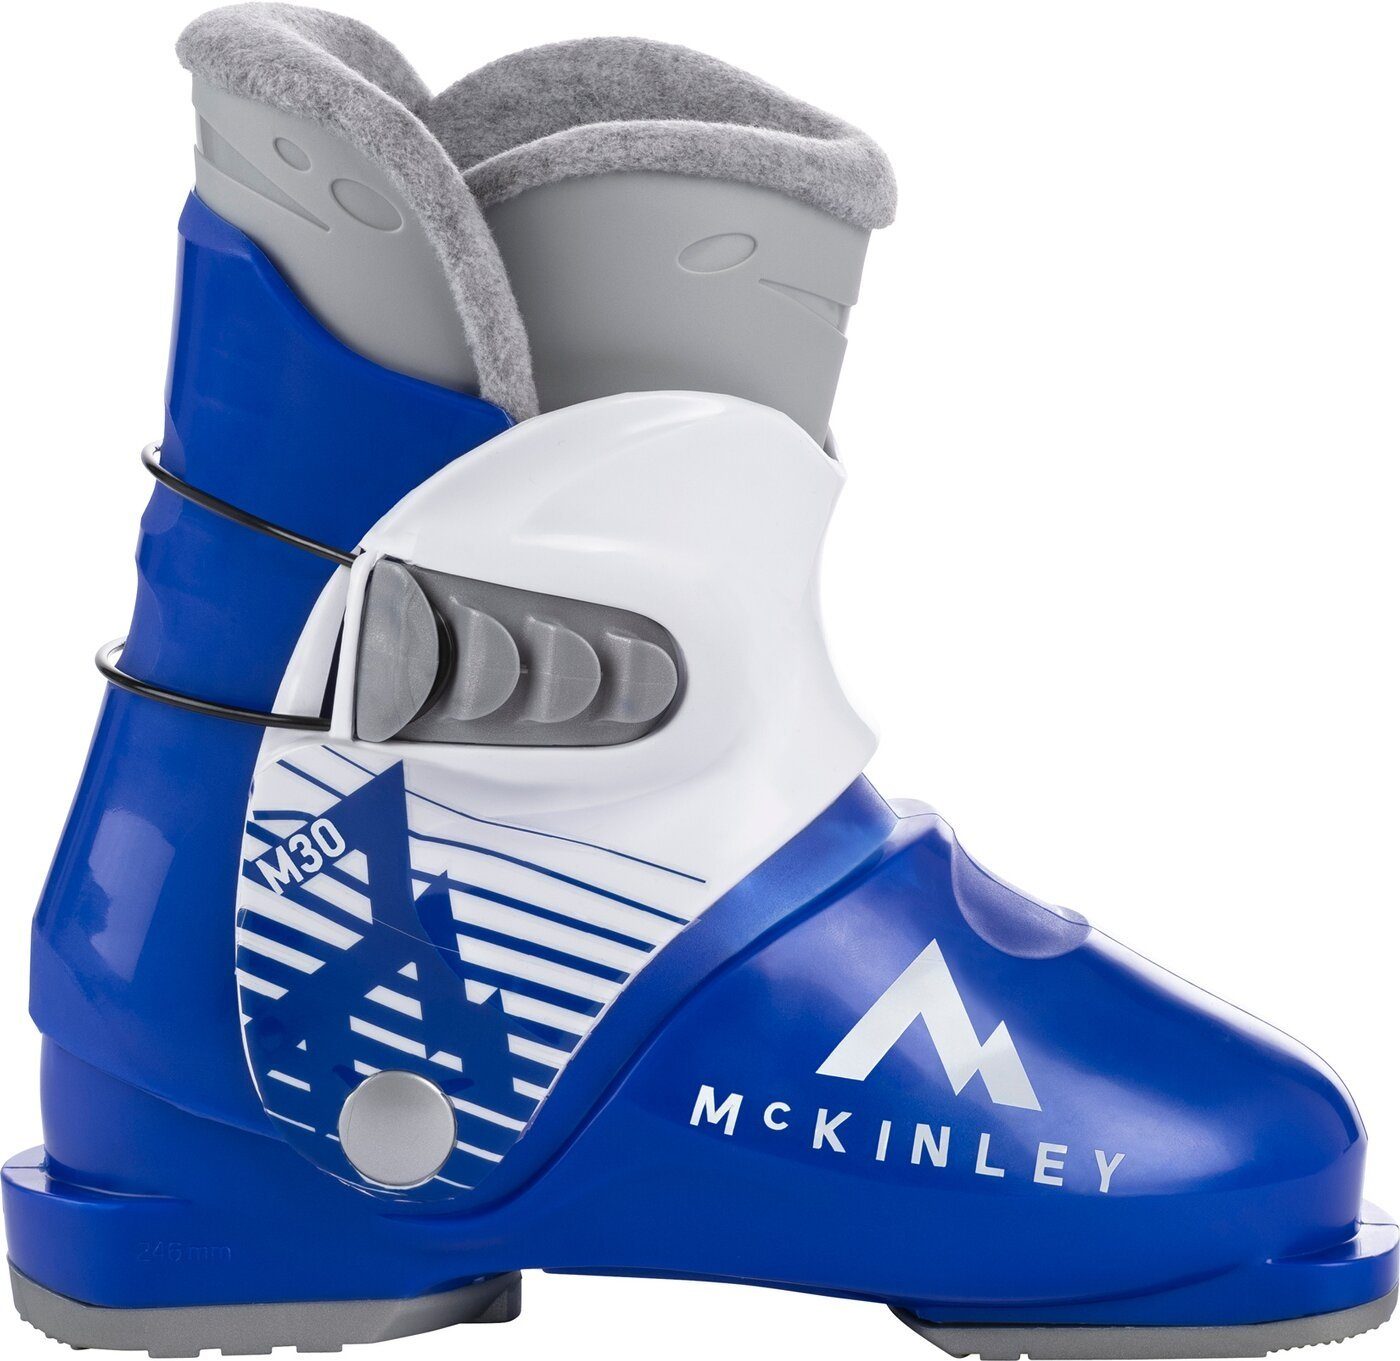 BLUE/WHITE Skischuh M30 McKINLEY Ki.-Skistiefel